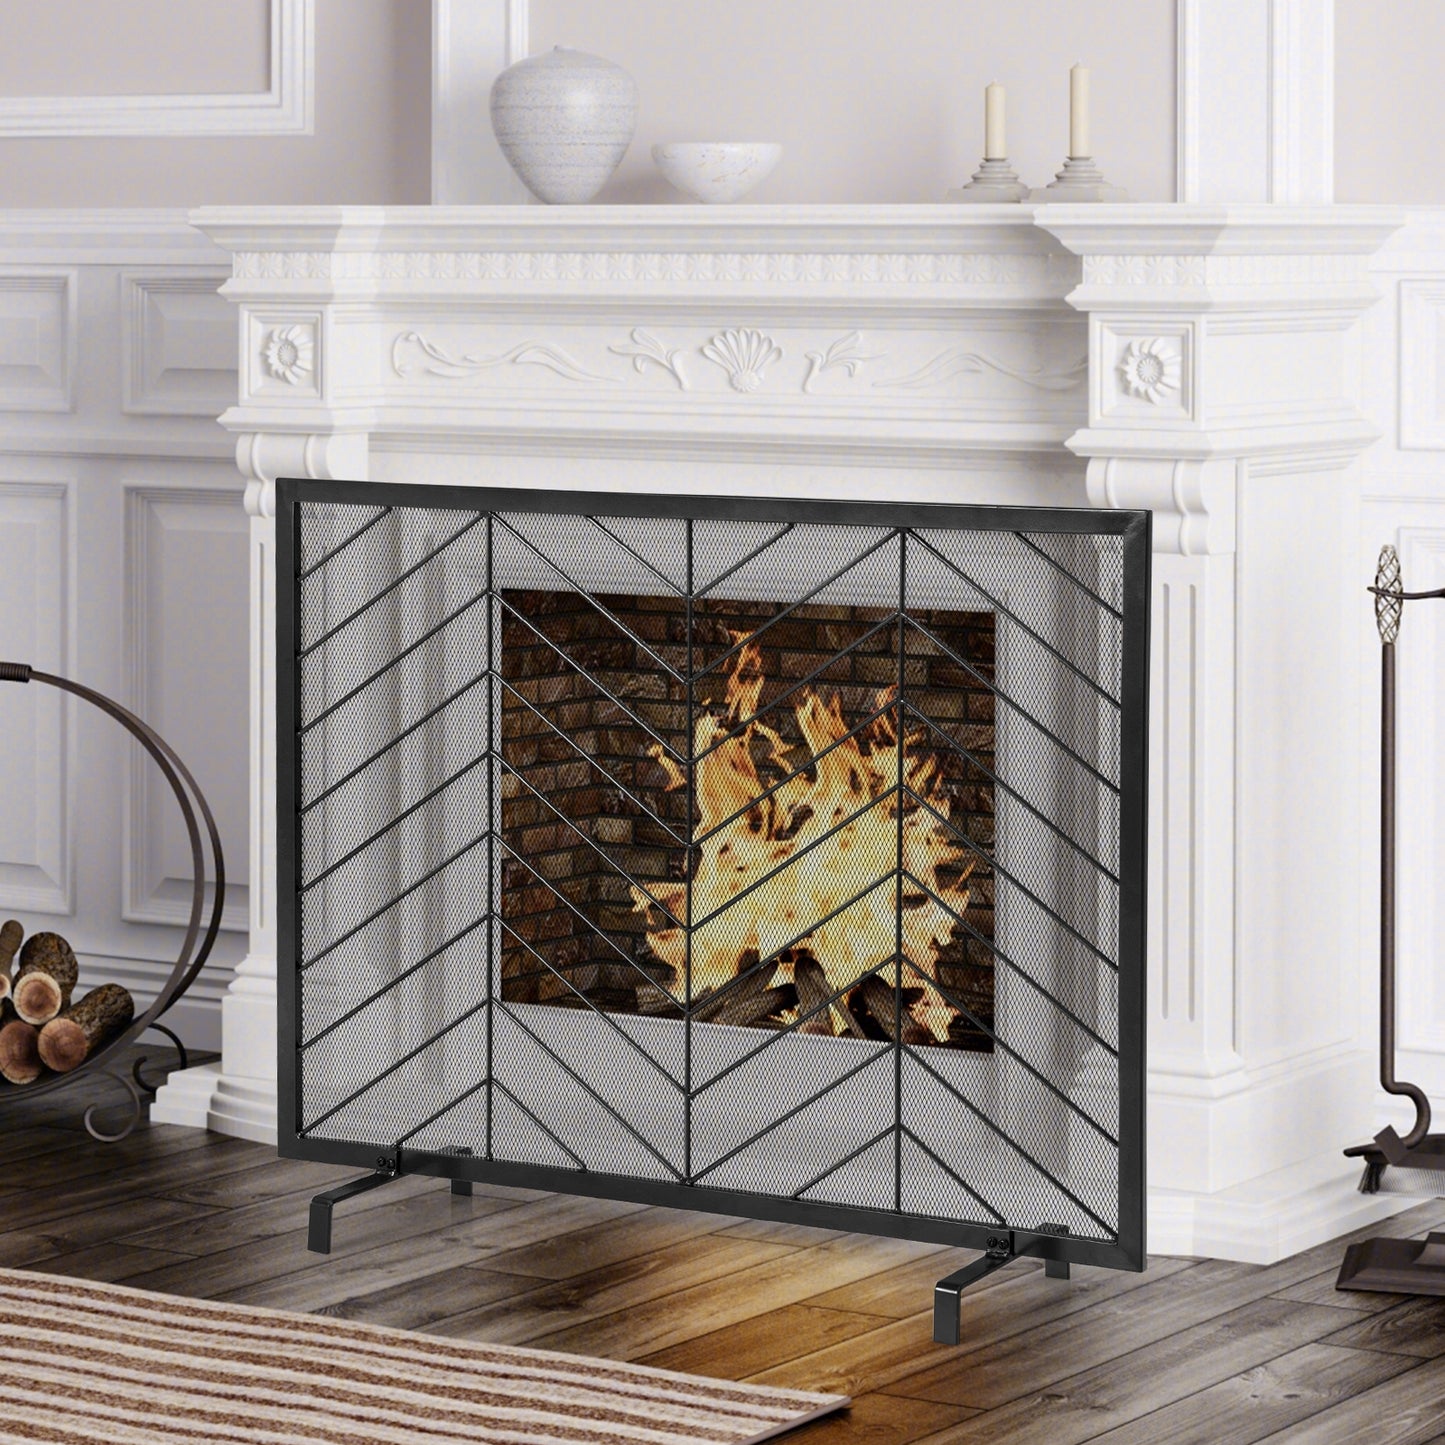 38 x 31 Inch Single Panel Fireplace Screen-Black